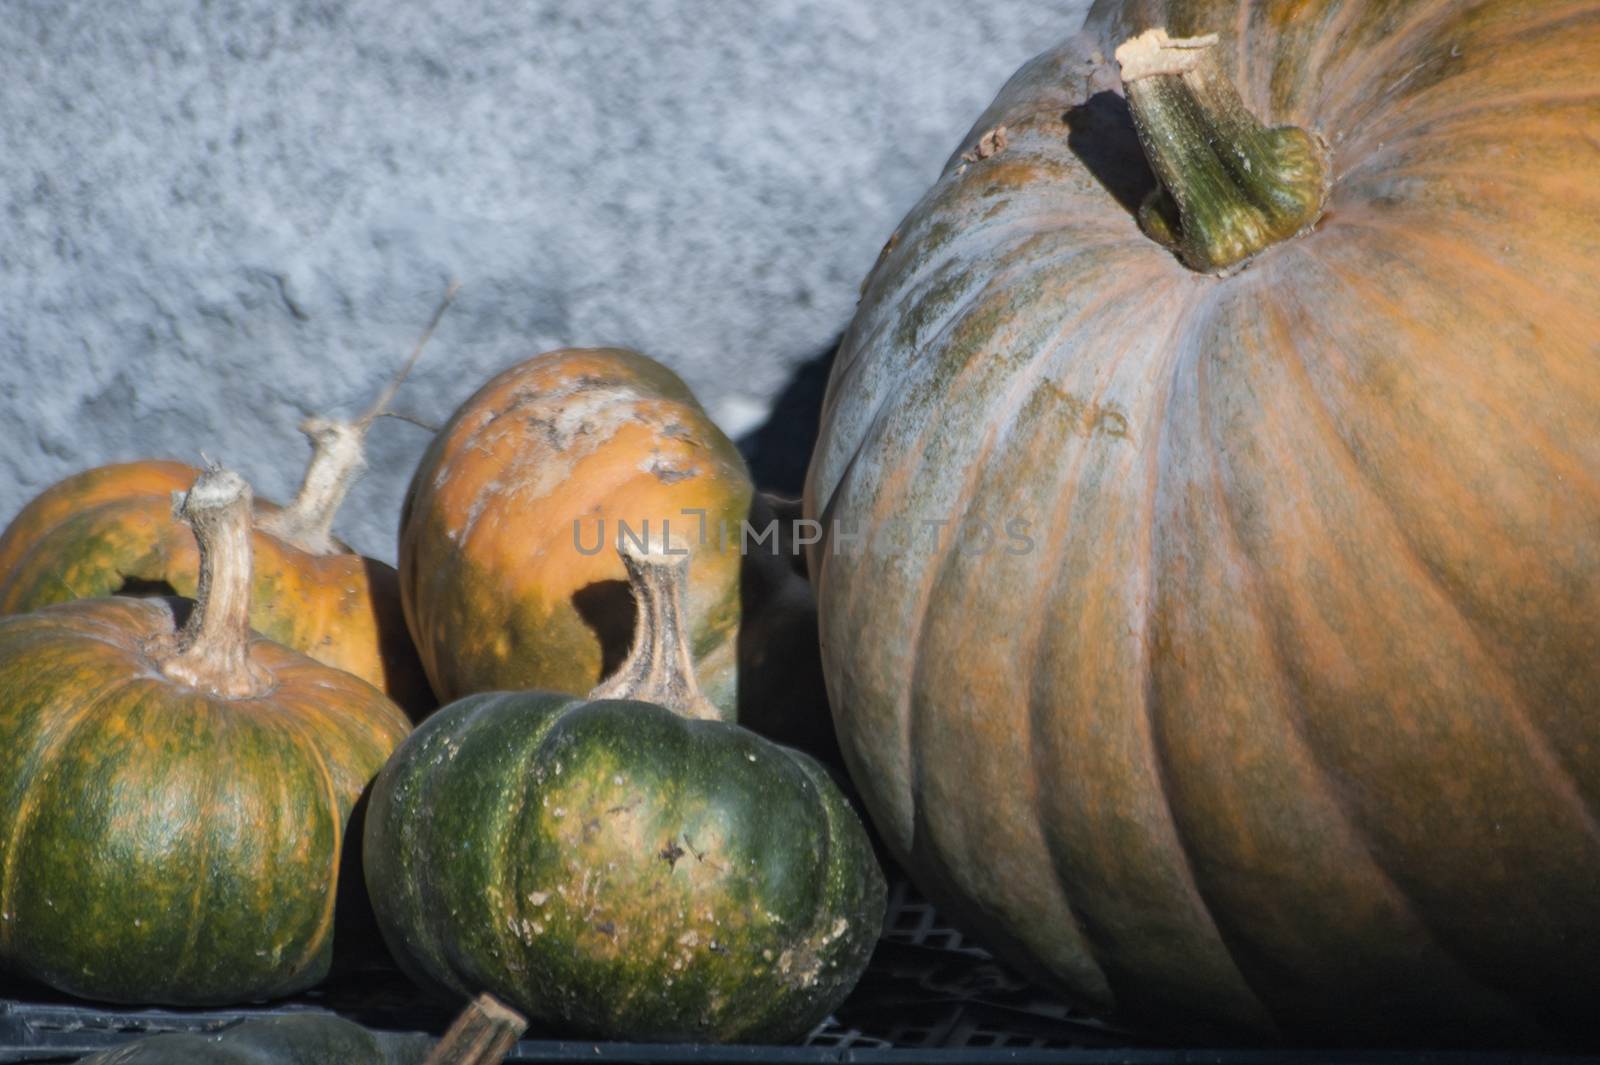 The pumpkins's family by alanstix64